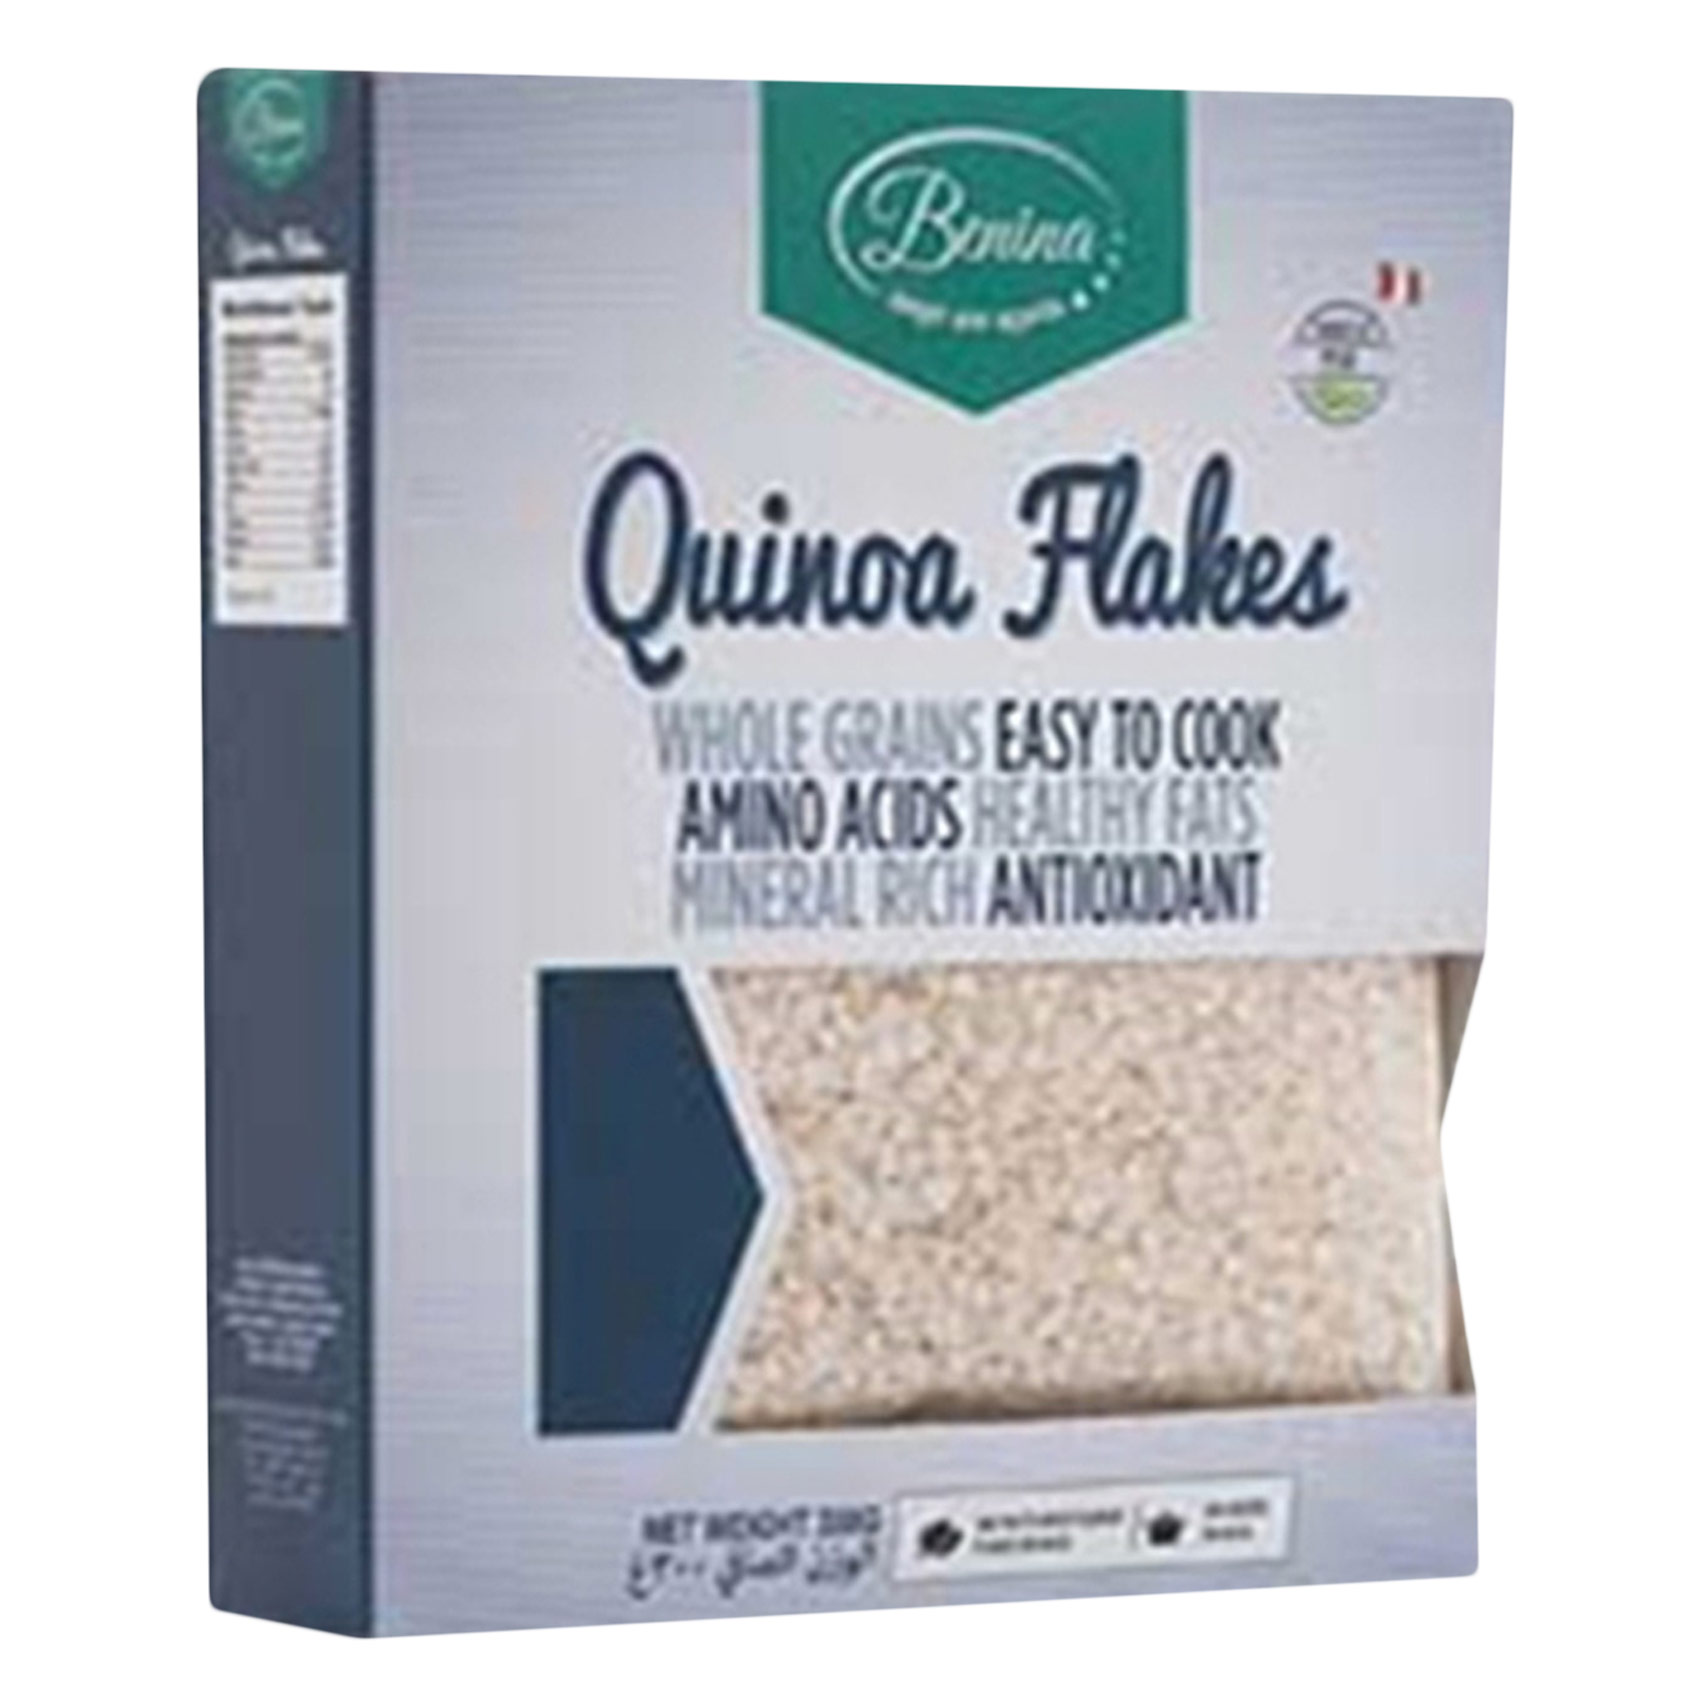 Benina Quinoa Flakes 300g